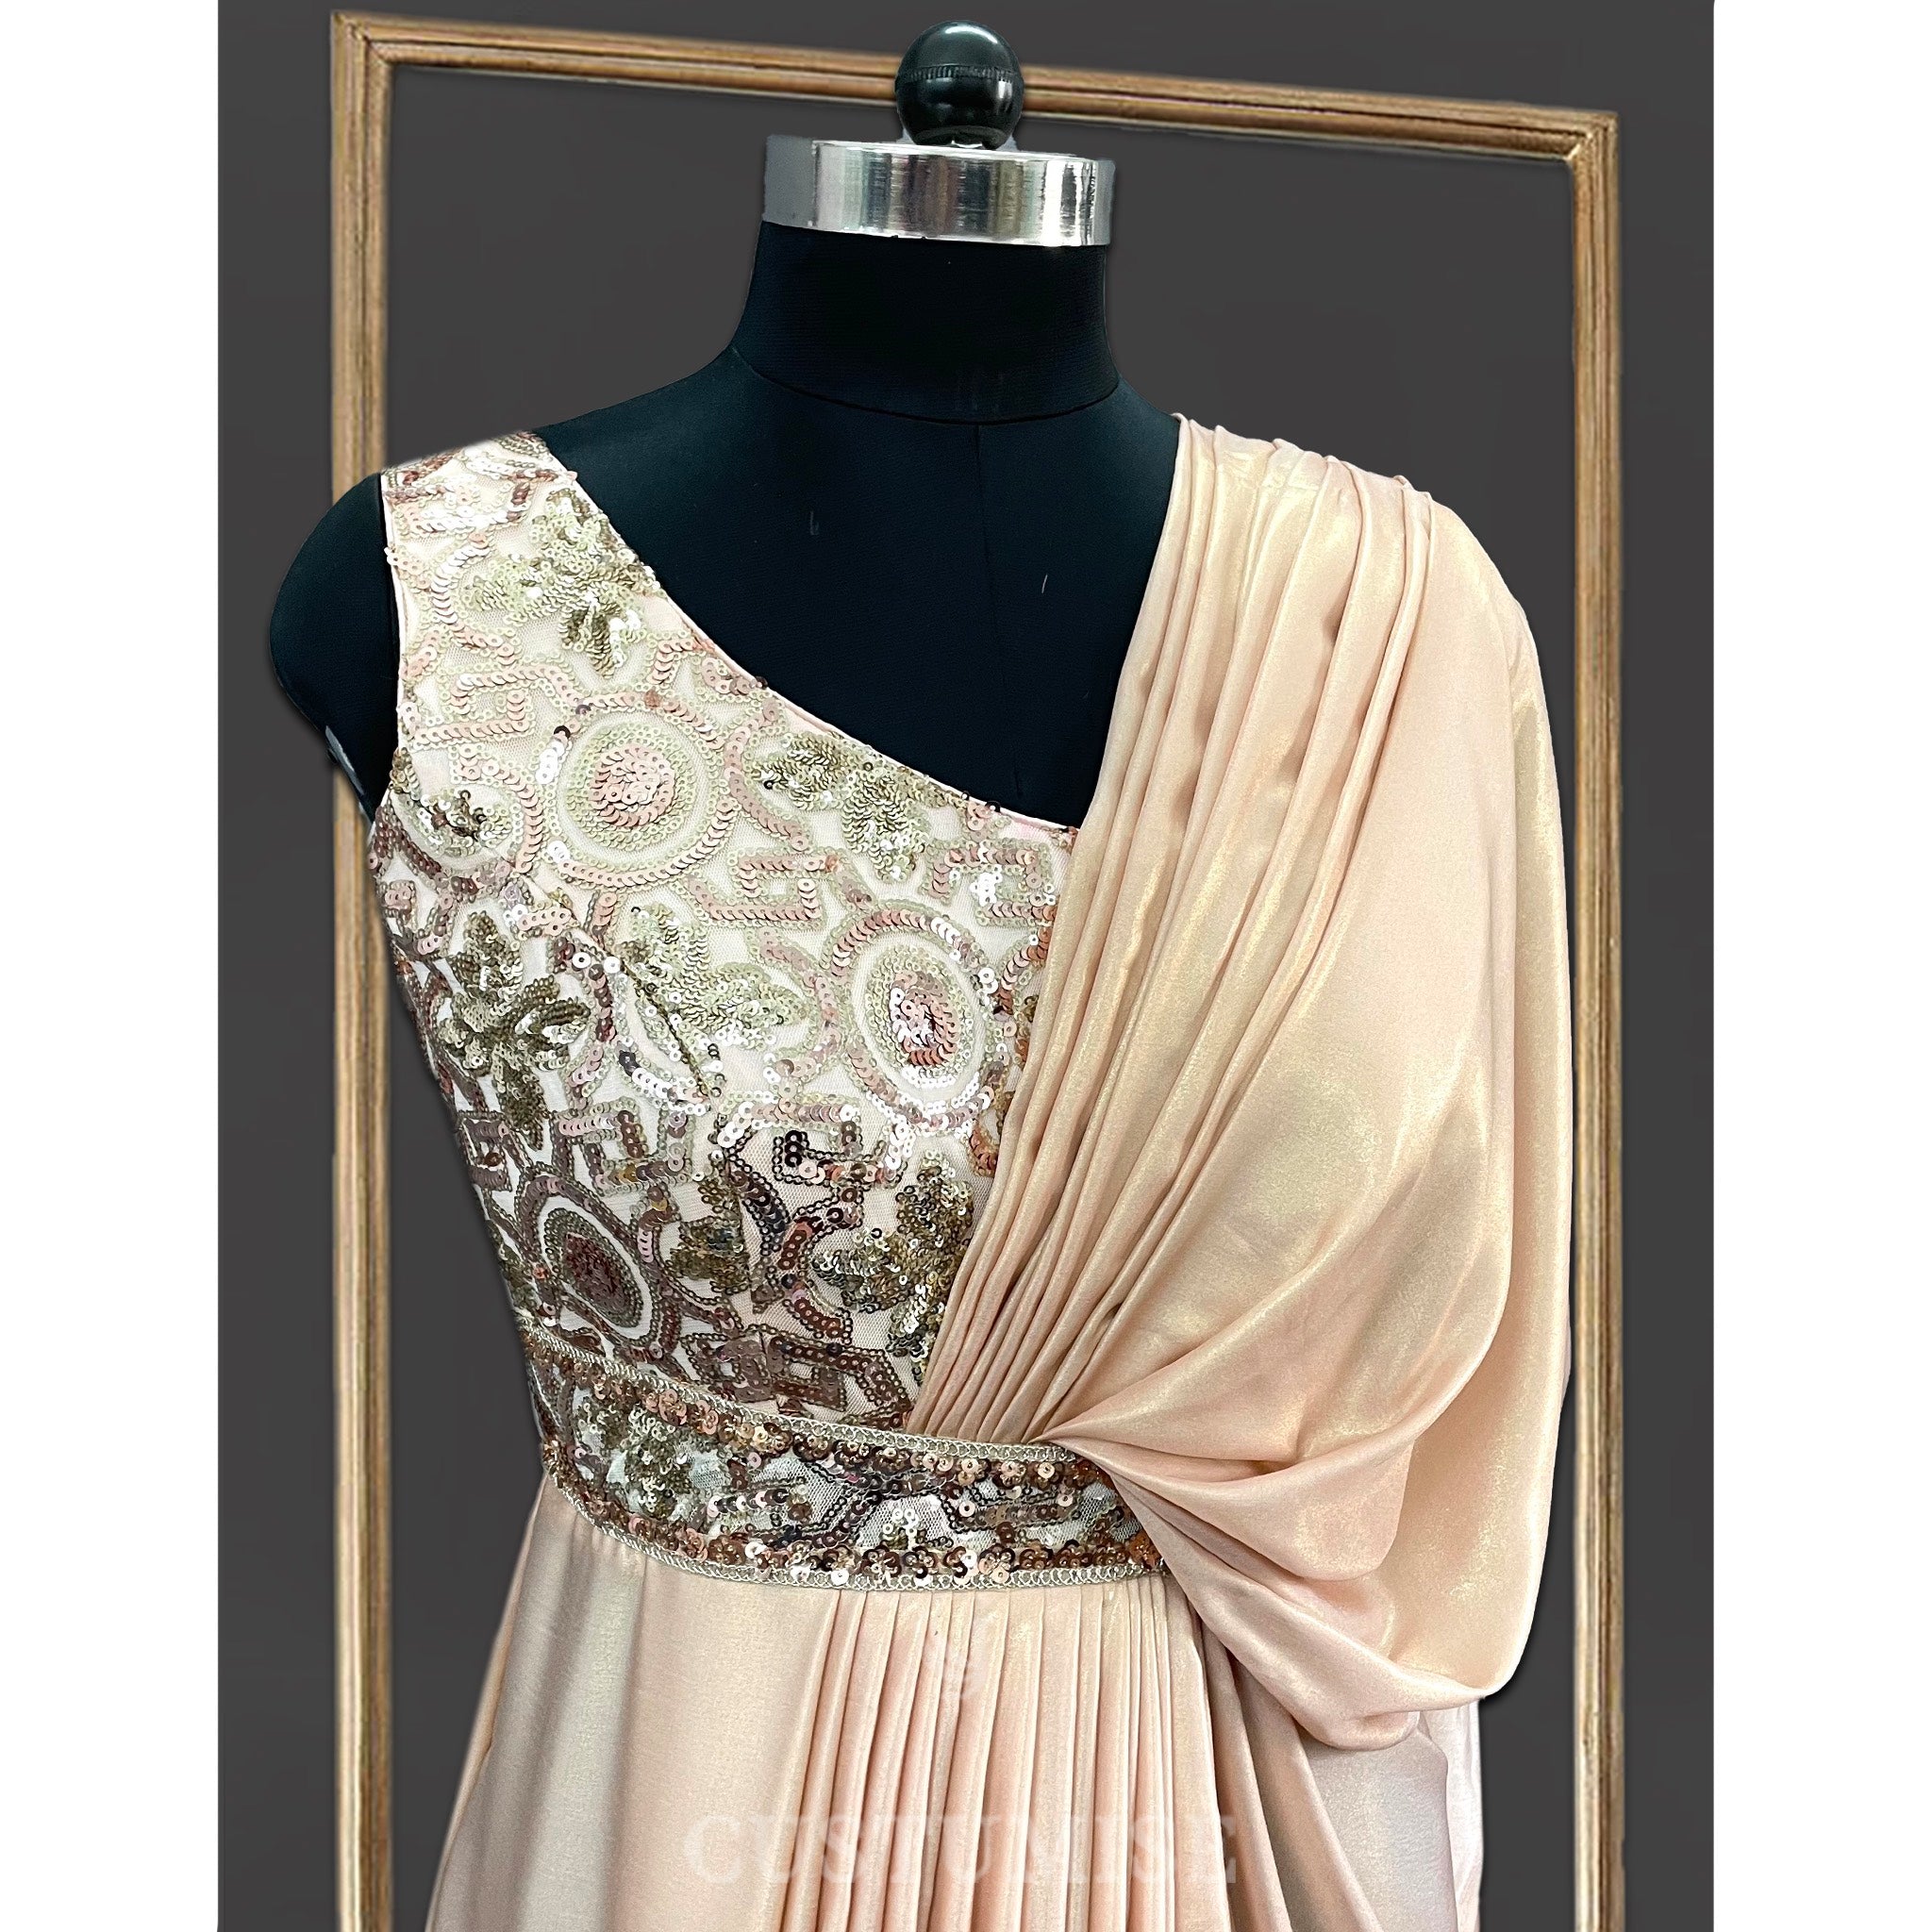 Stylish Draped Splendor-Rose gold Saree gown - Indian Designer Bridal Wedding Outfit